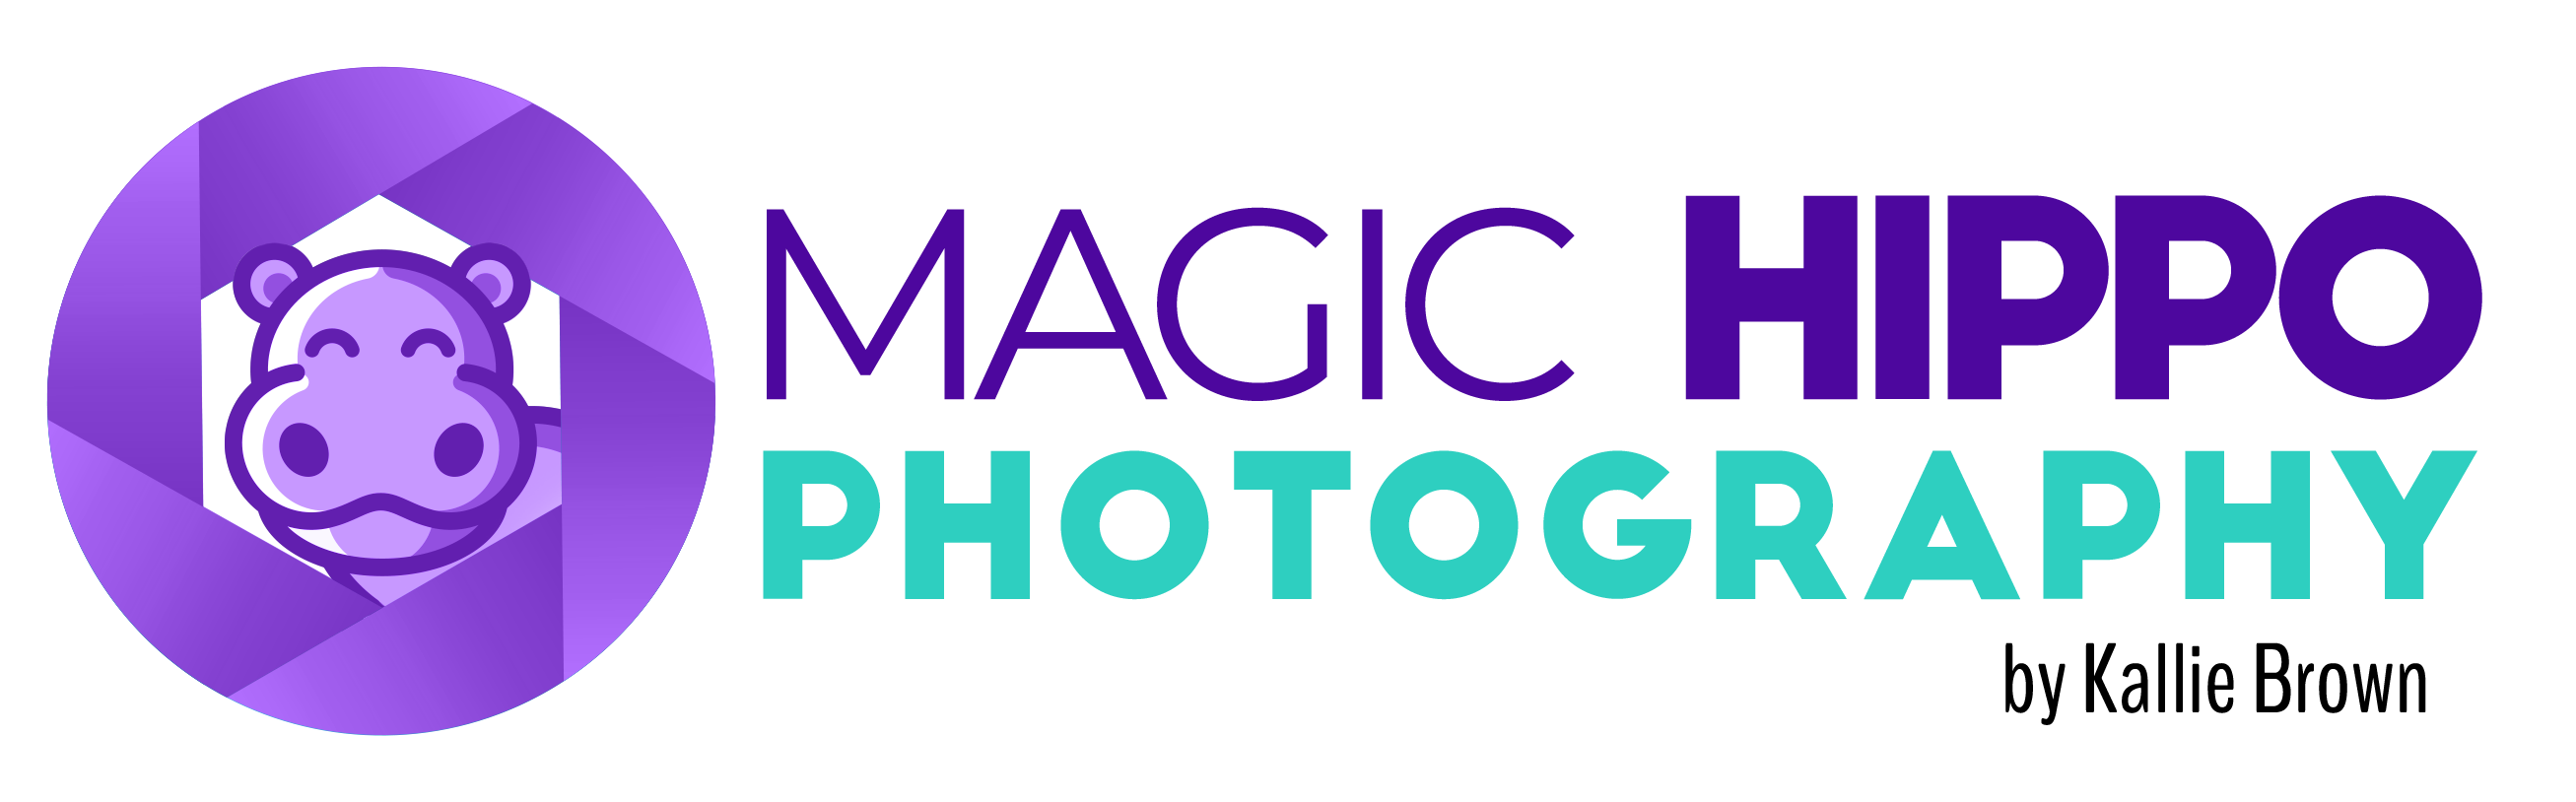 Magic Hippo Photography